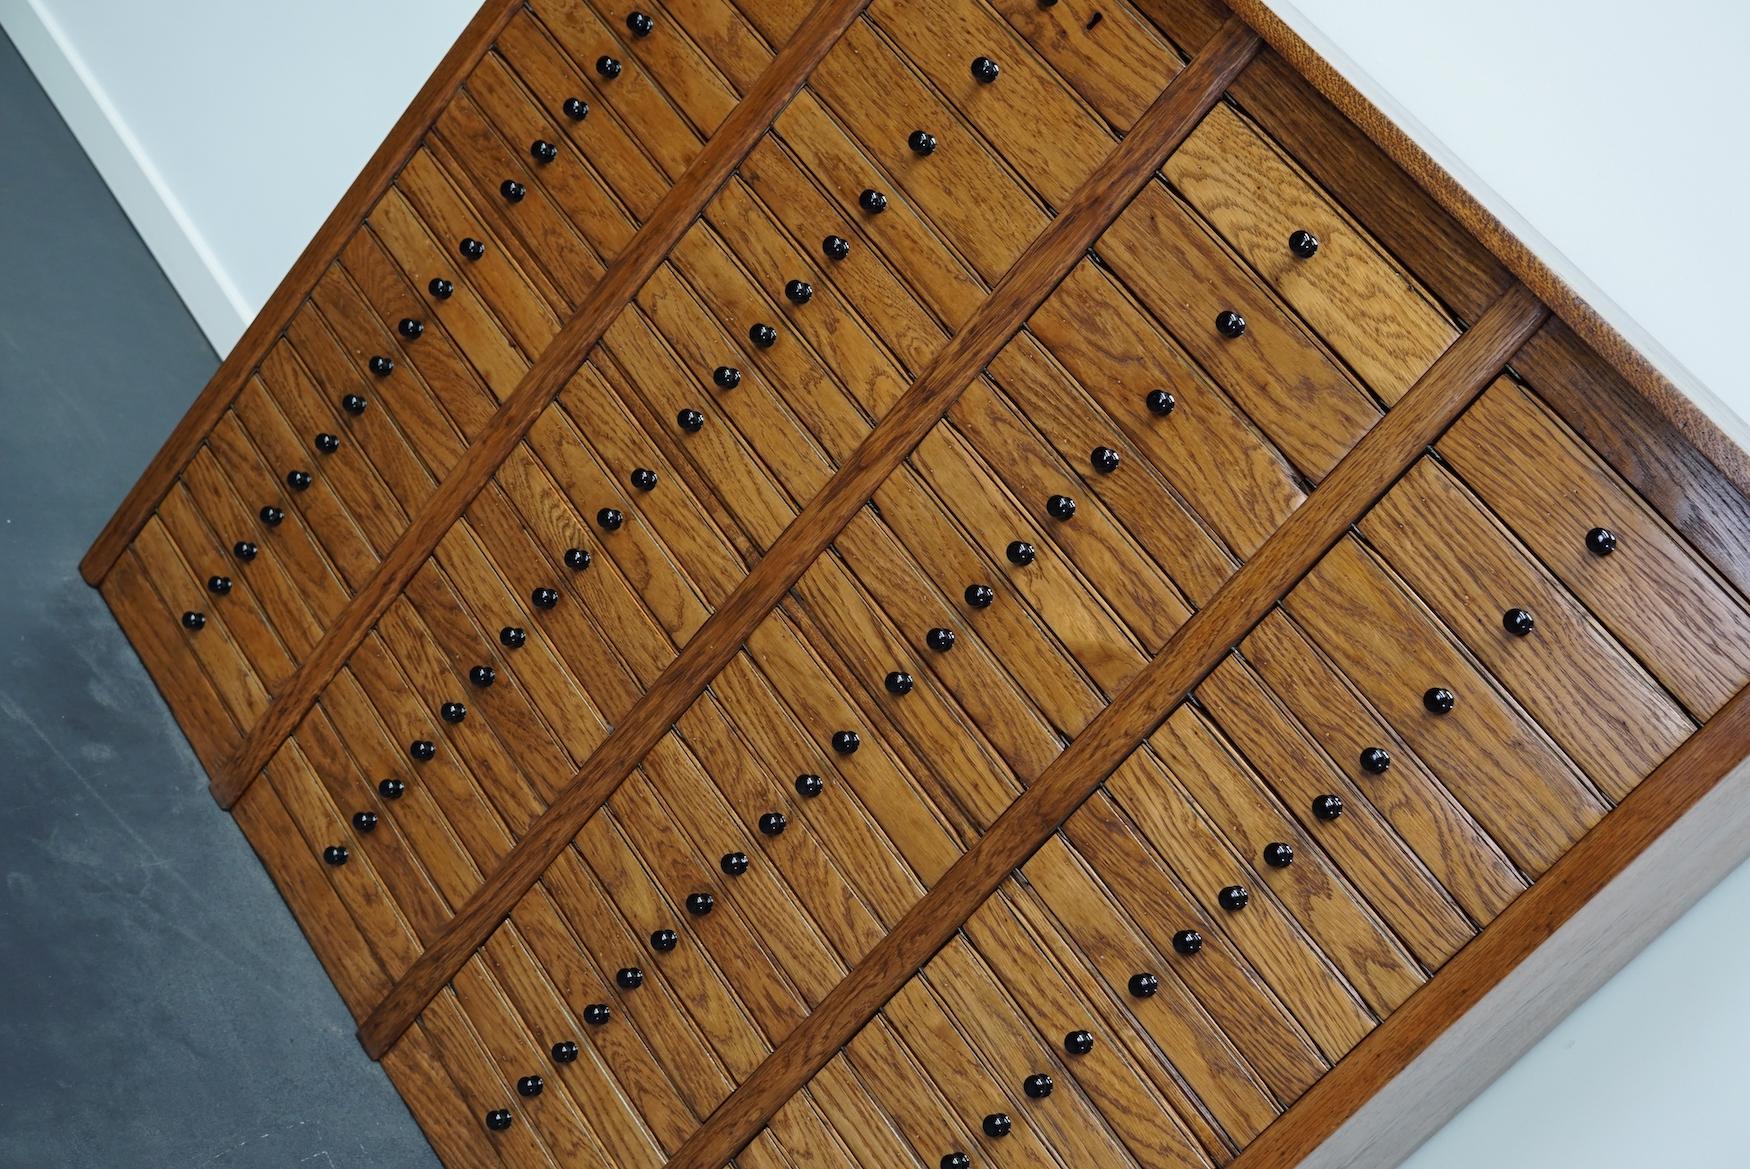 Dutch Oak Apothecary Apothecary Cabinet, 1930s 4